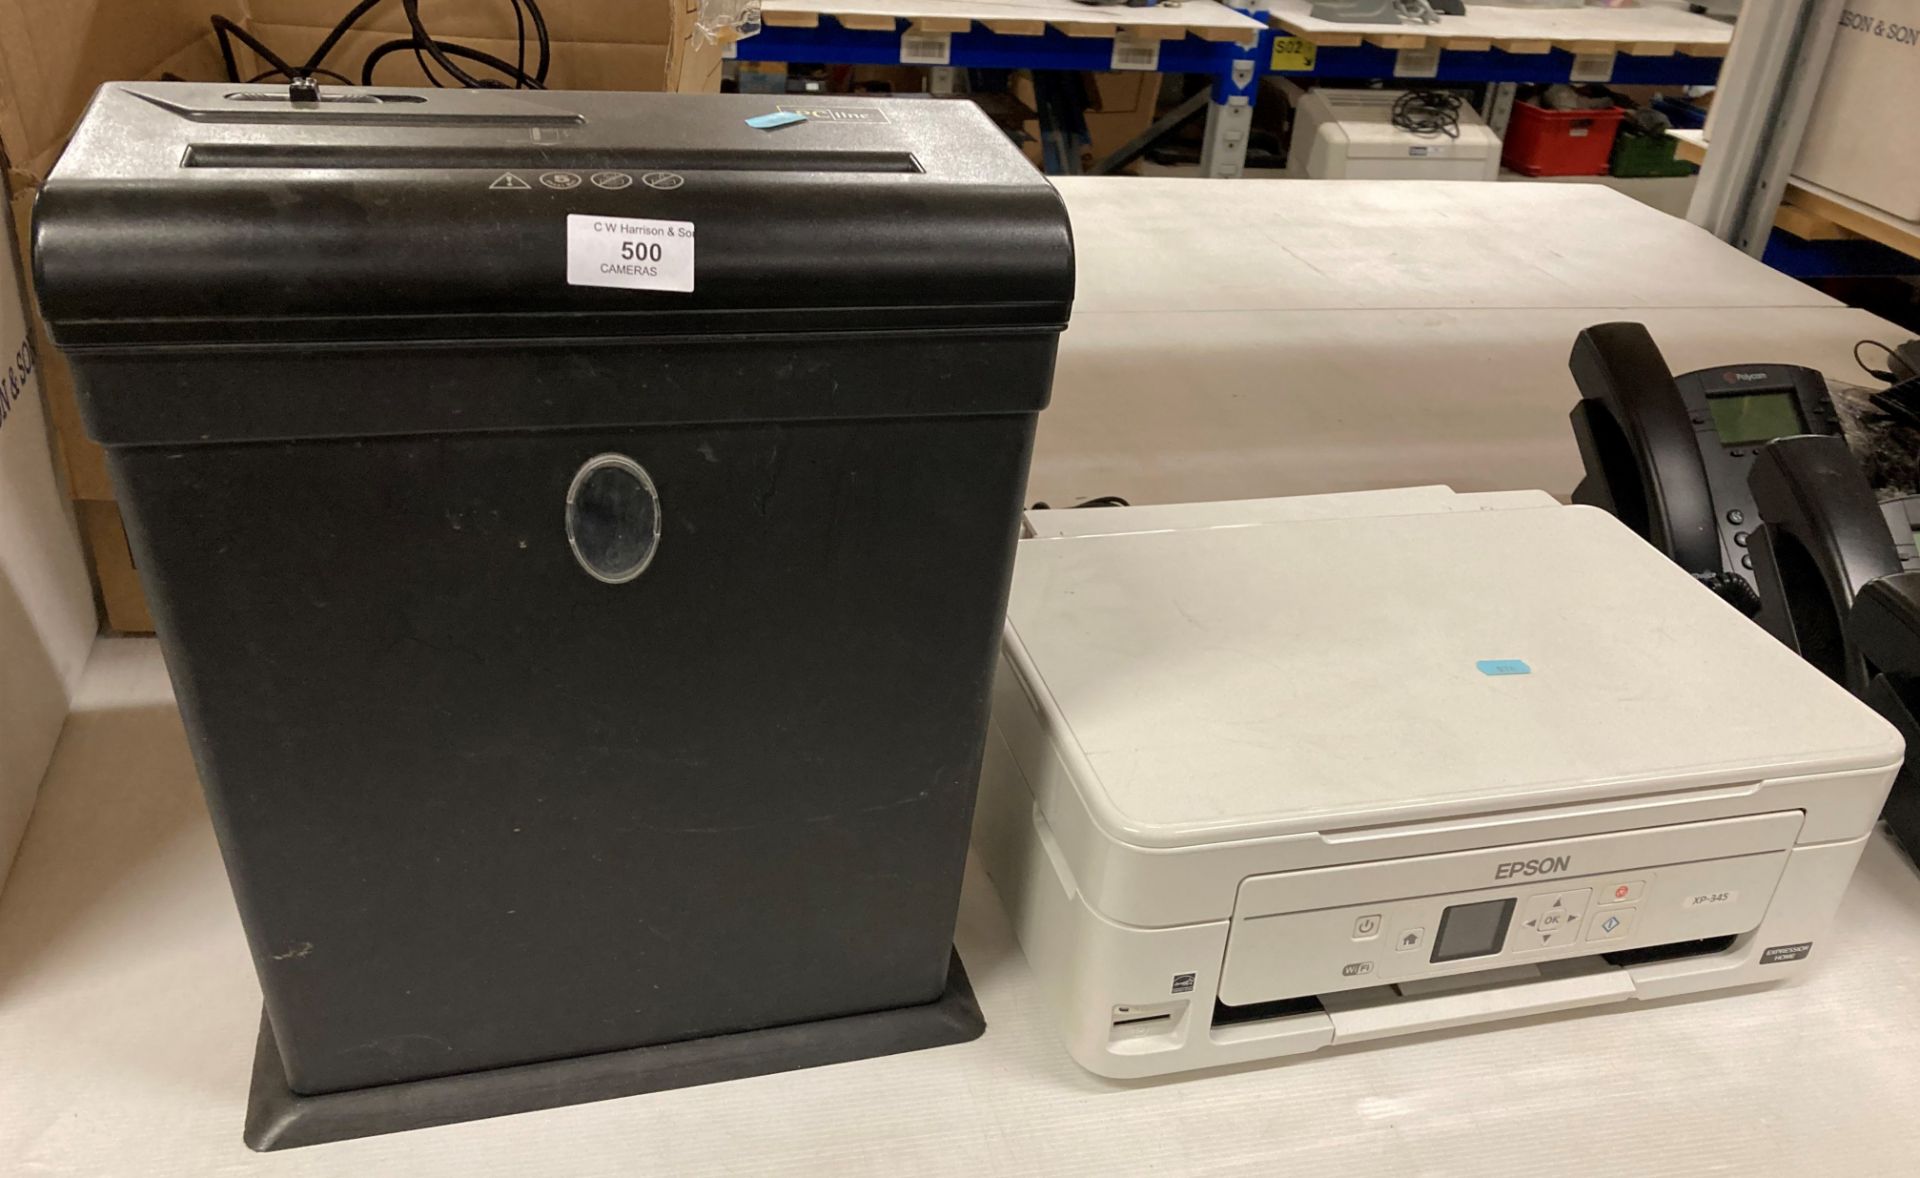 2 x Items - PC Line paper-shredder and an Epson XP-345 printer/copier (saleroom location: P03)